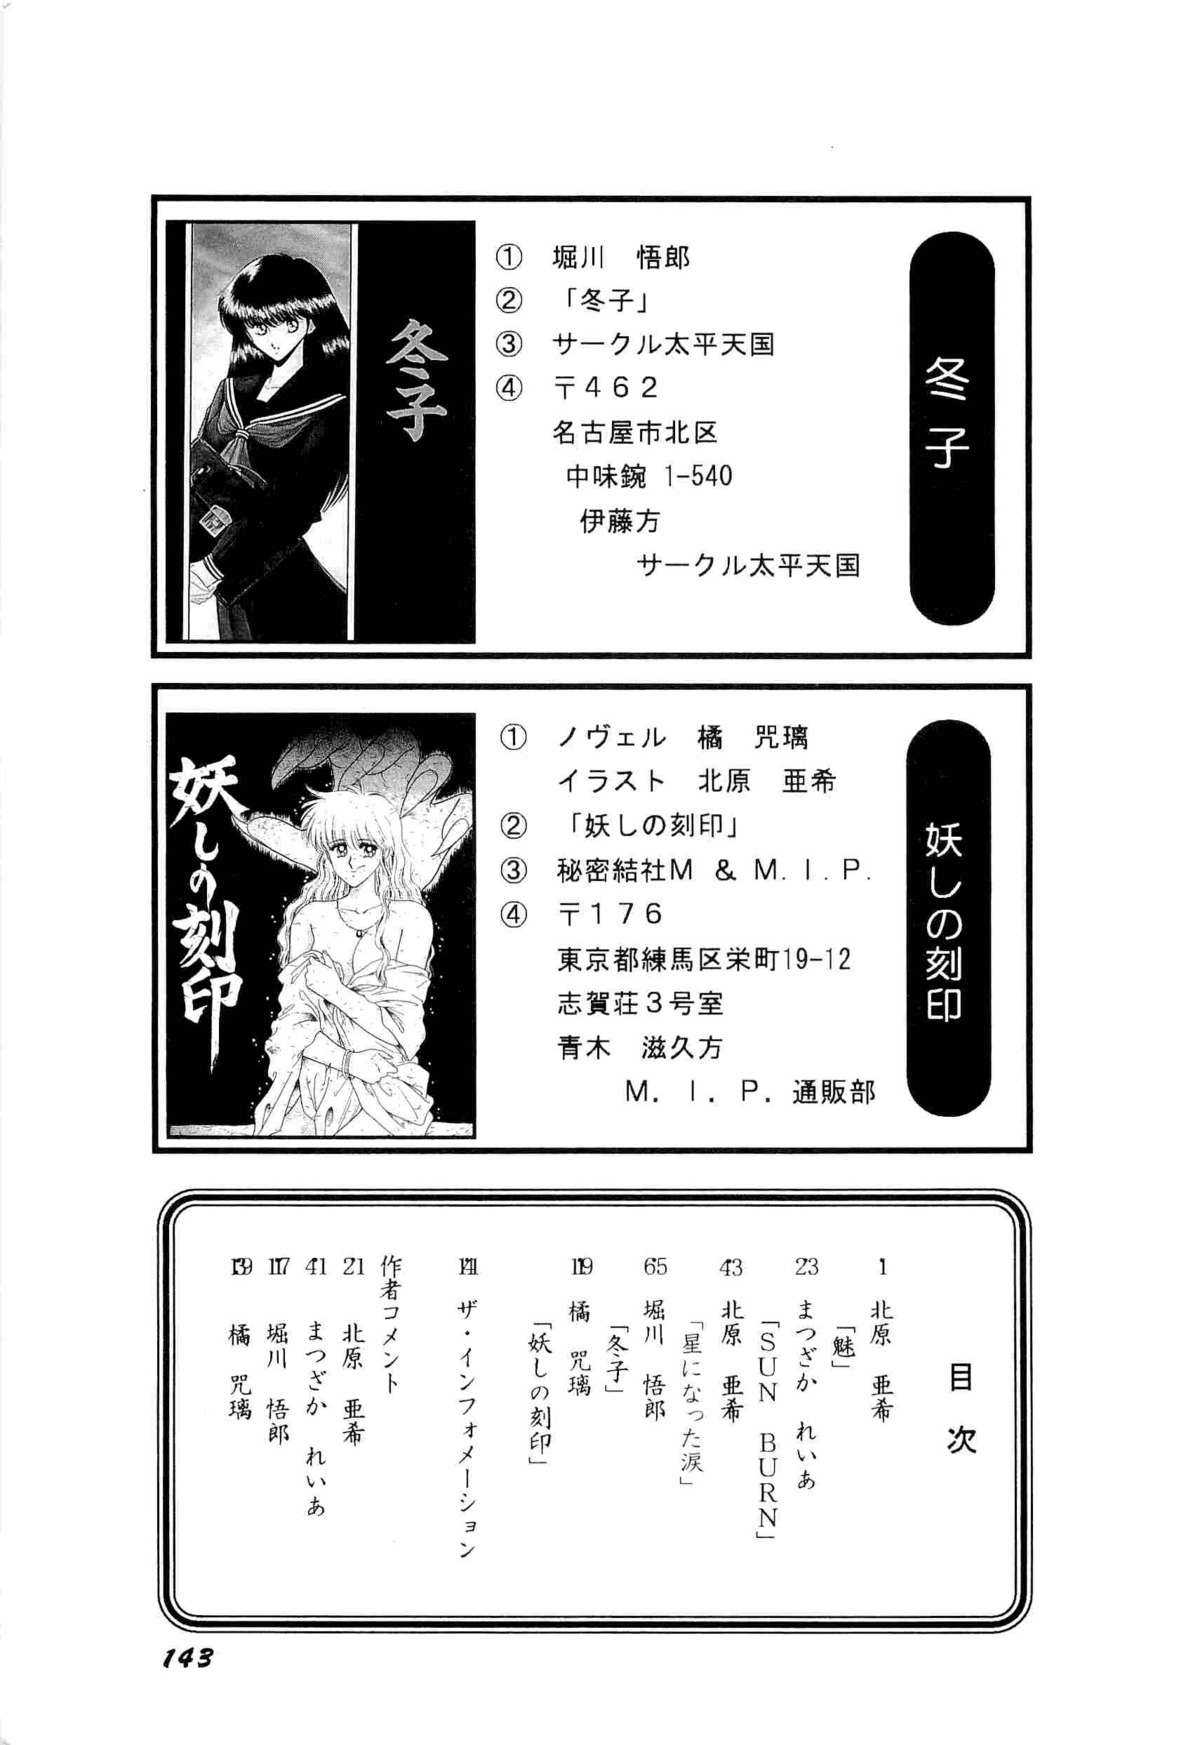 [Anthology] Bisyoujo Anthology &#039;93 jyoukan [アンソロジー] 美少女同人アンソロジー 93年度版 上巻